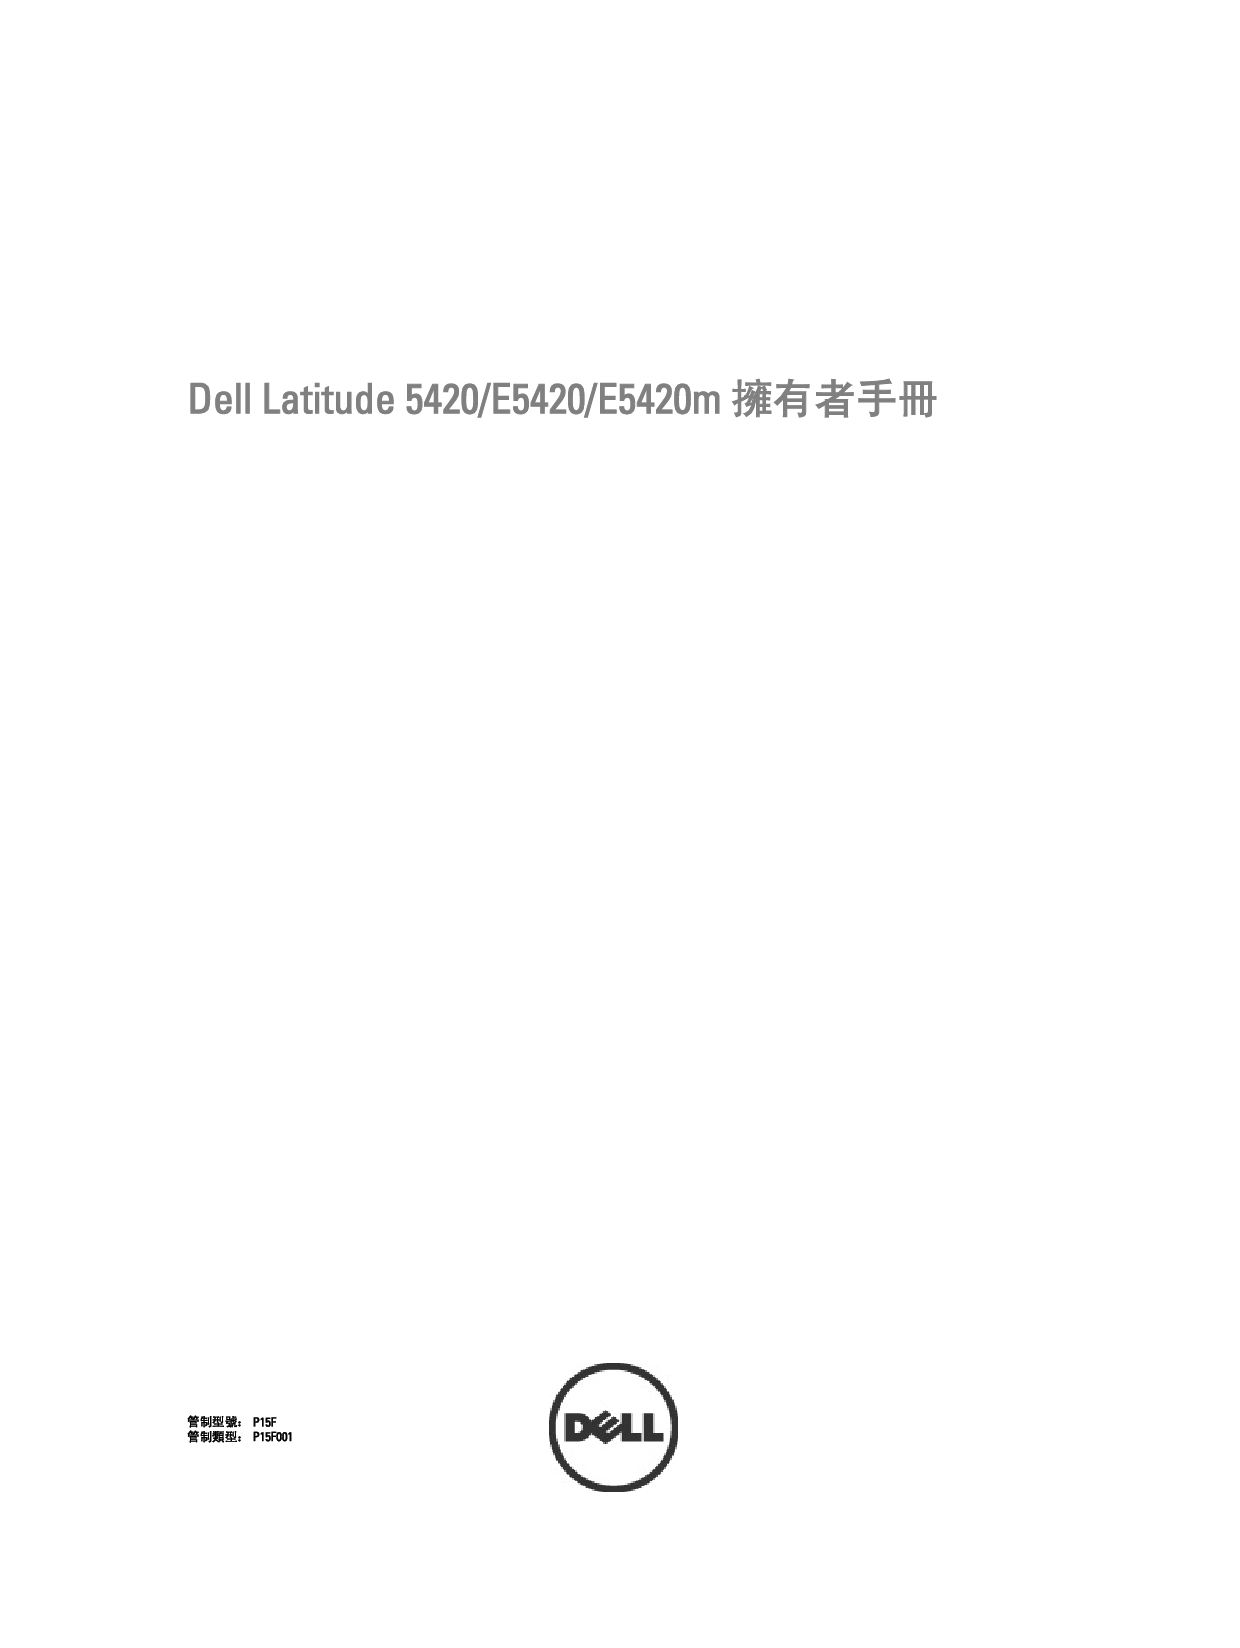 戴尔 Dell Latitude 5420 繁体 用户手册 封面